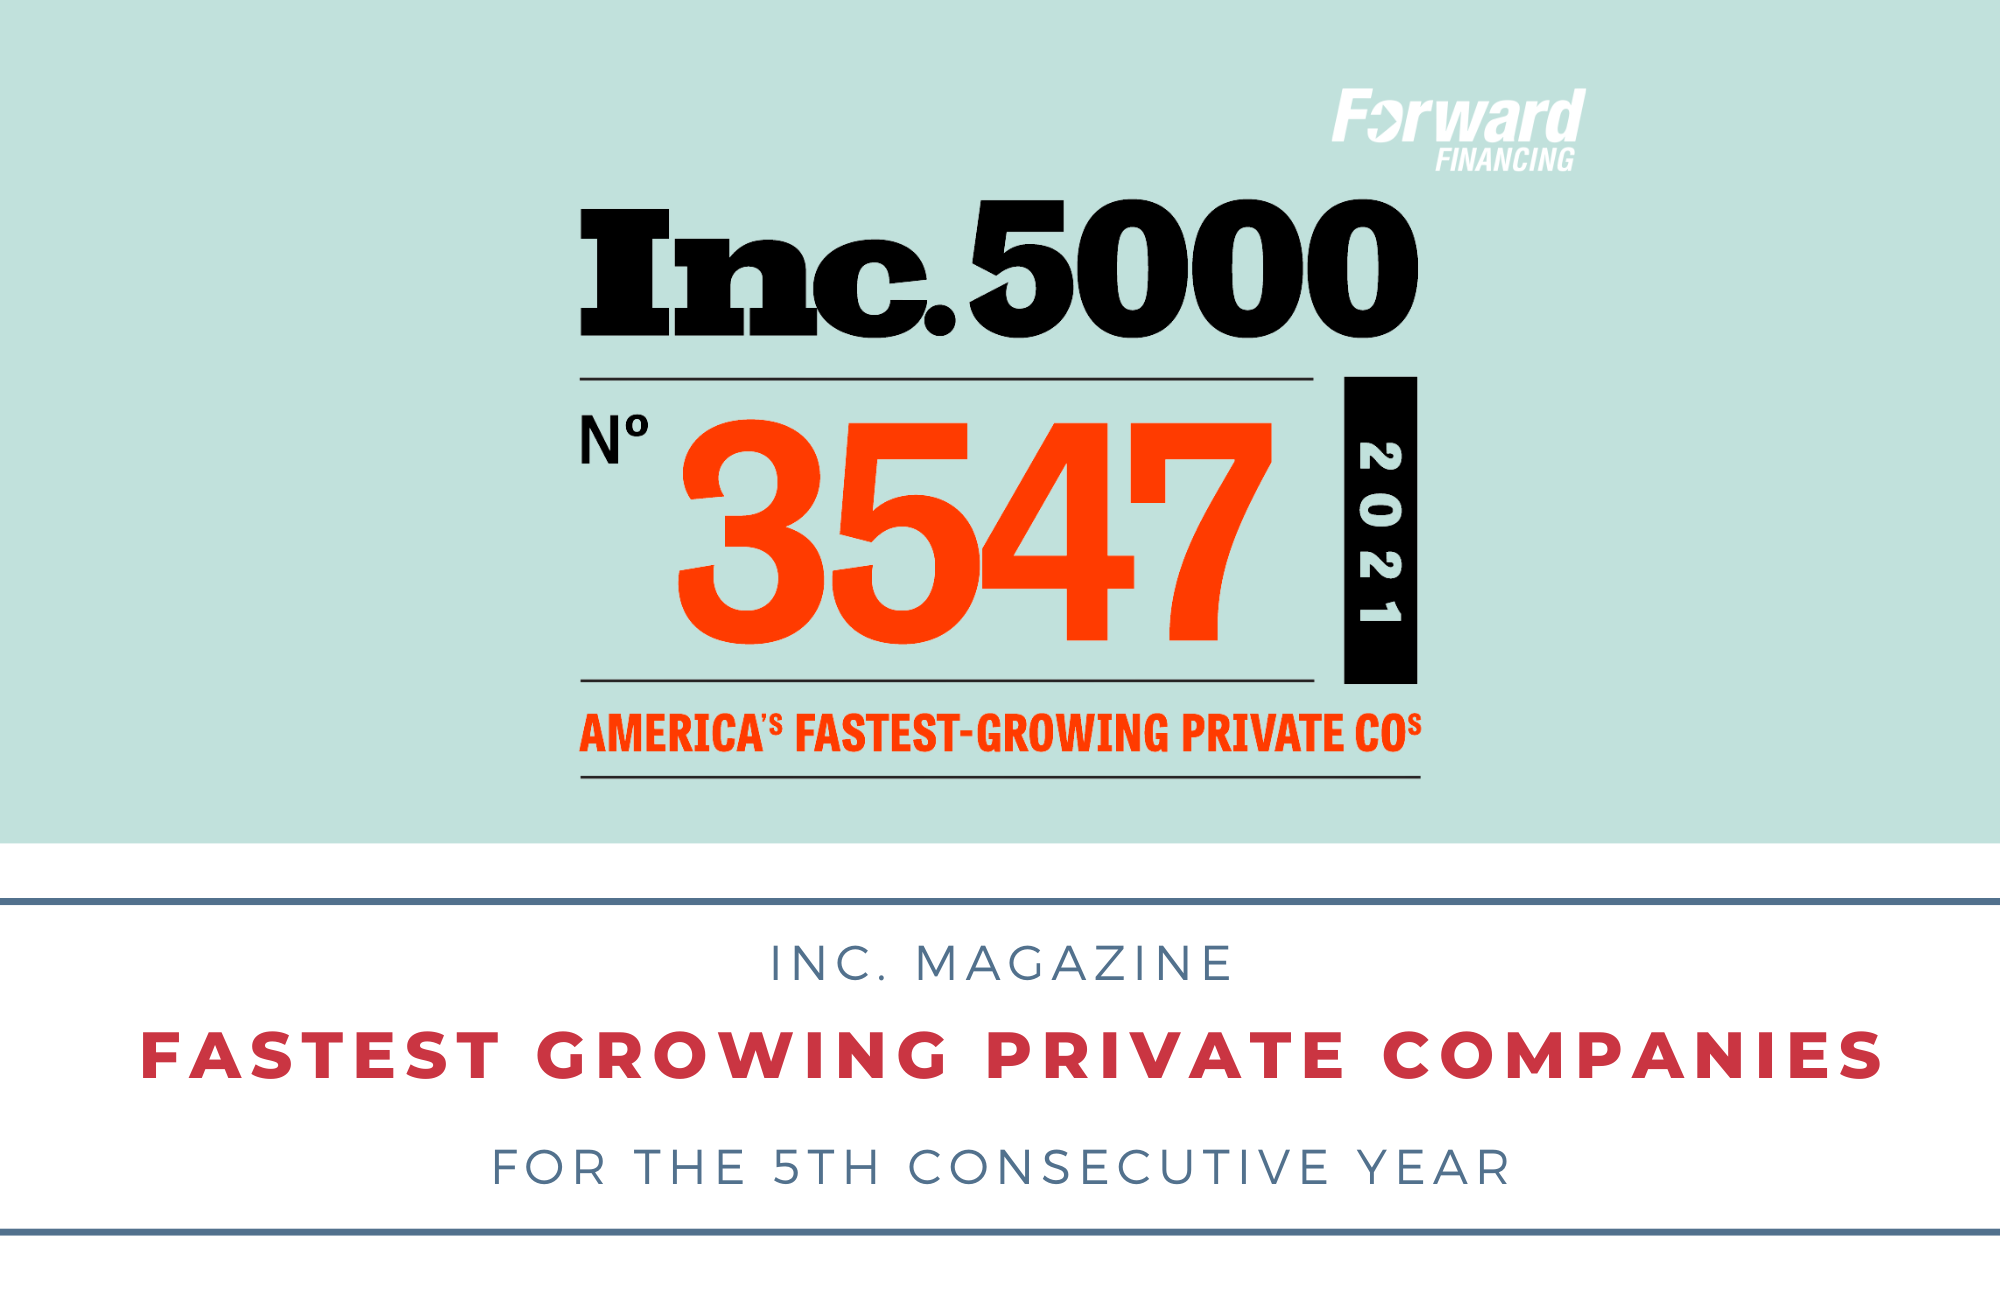 Forward Financing on Inc. 5000 for 5th Year